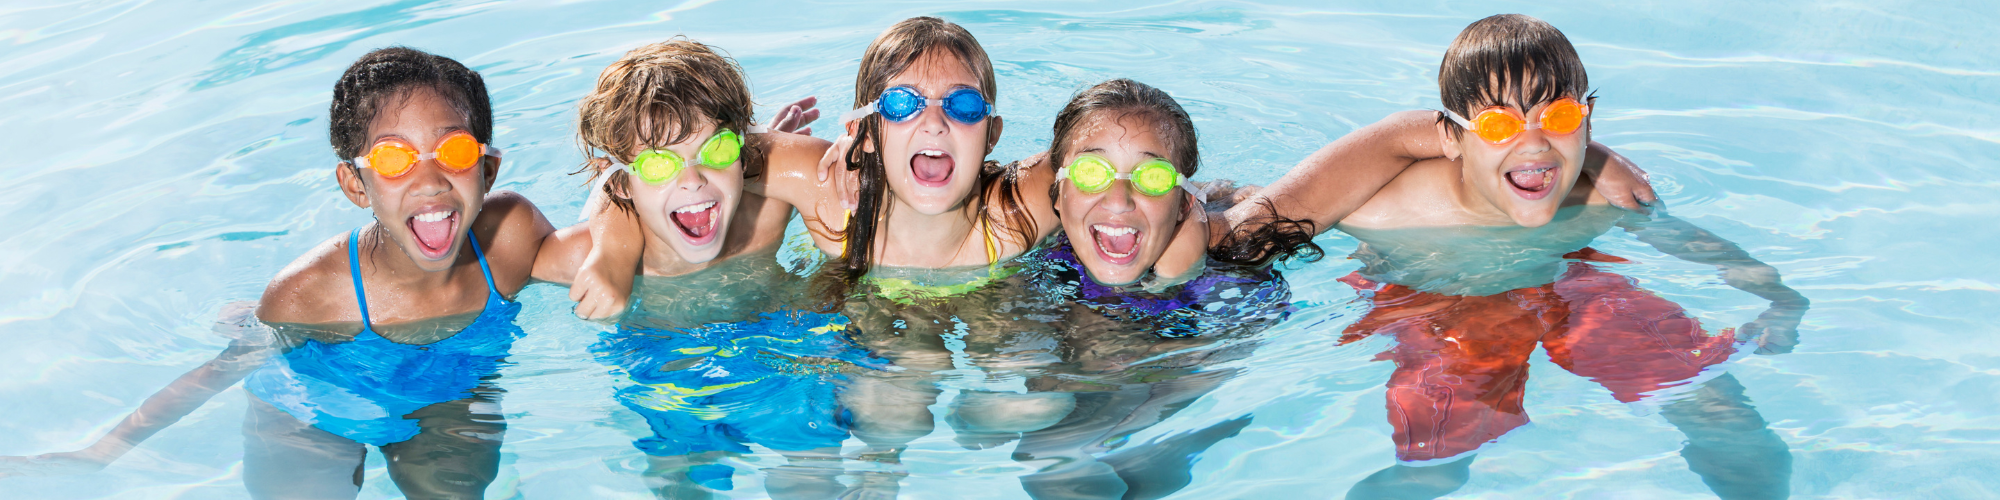 kids in pool wearing swim googles